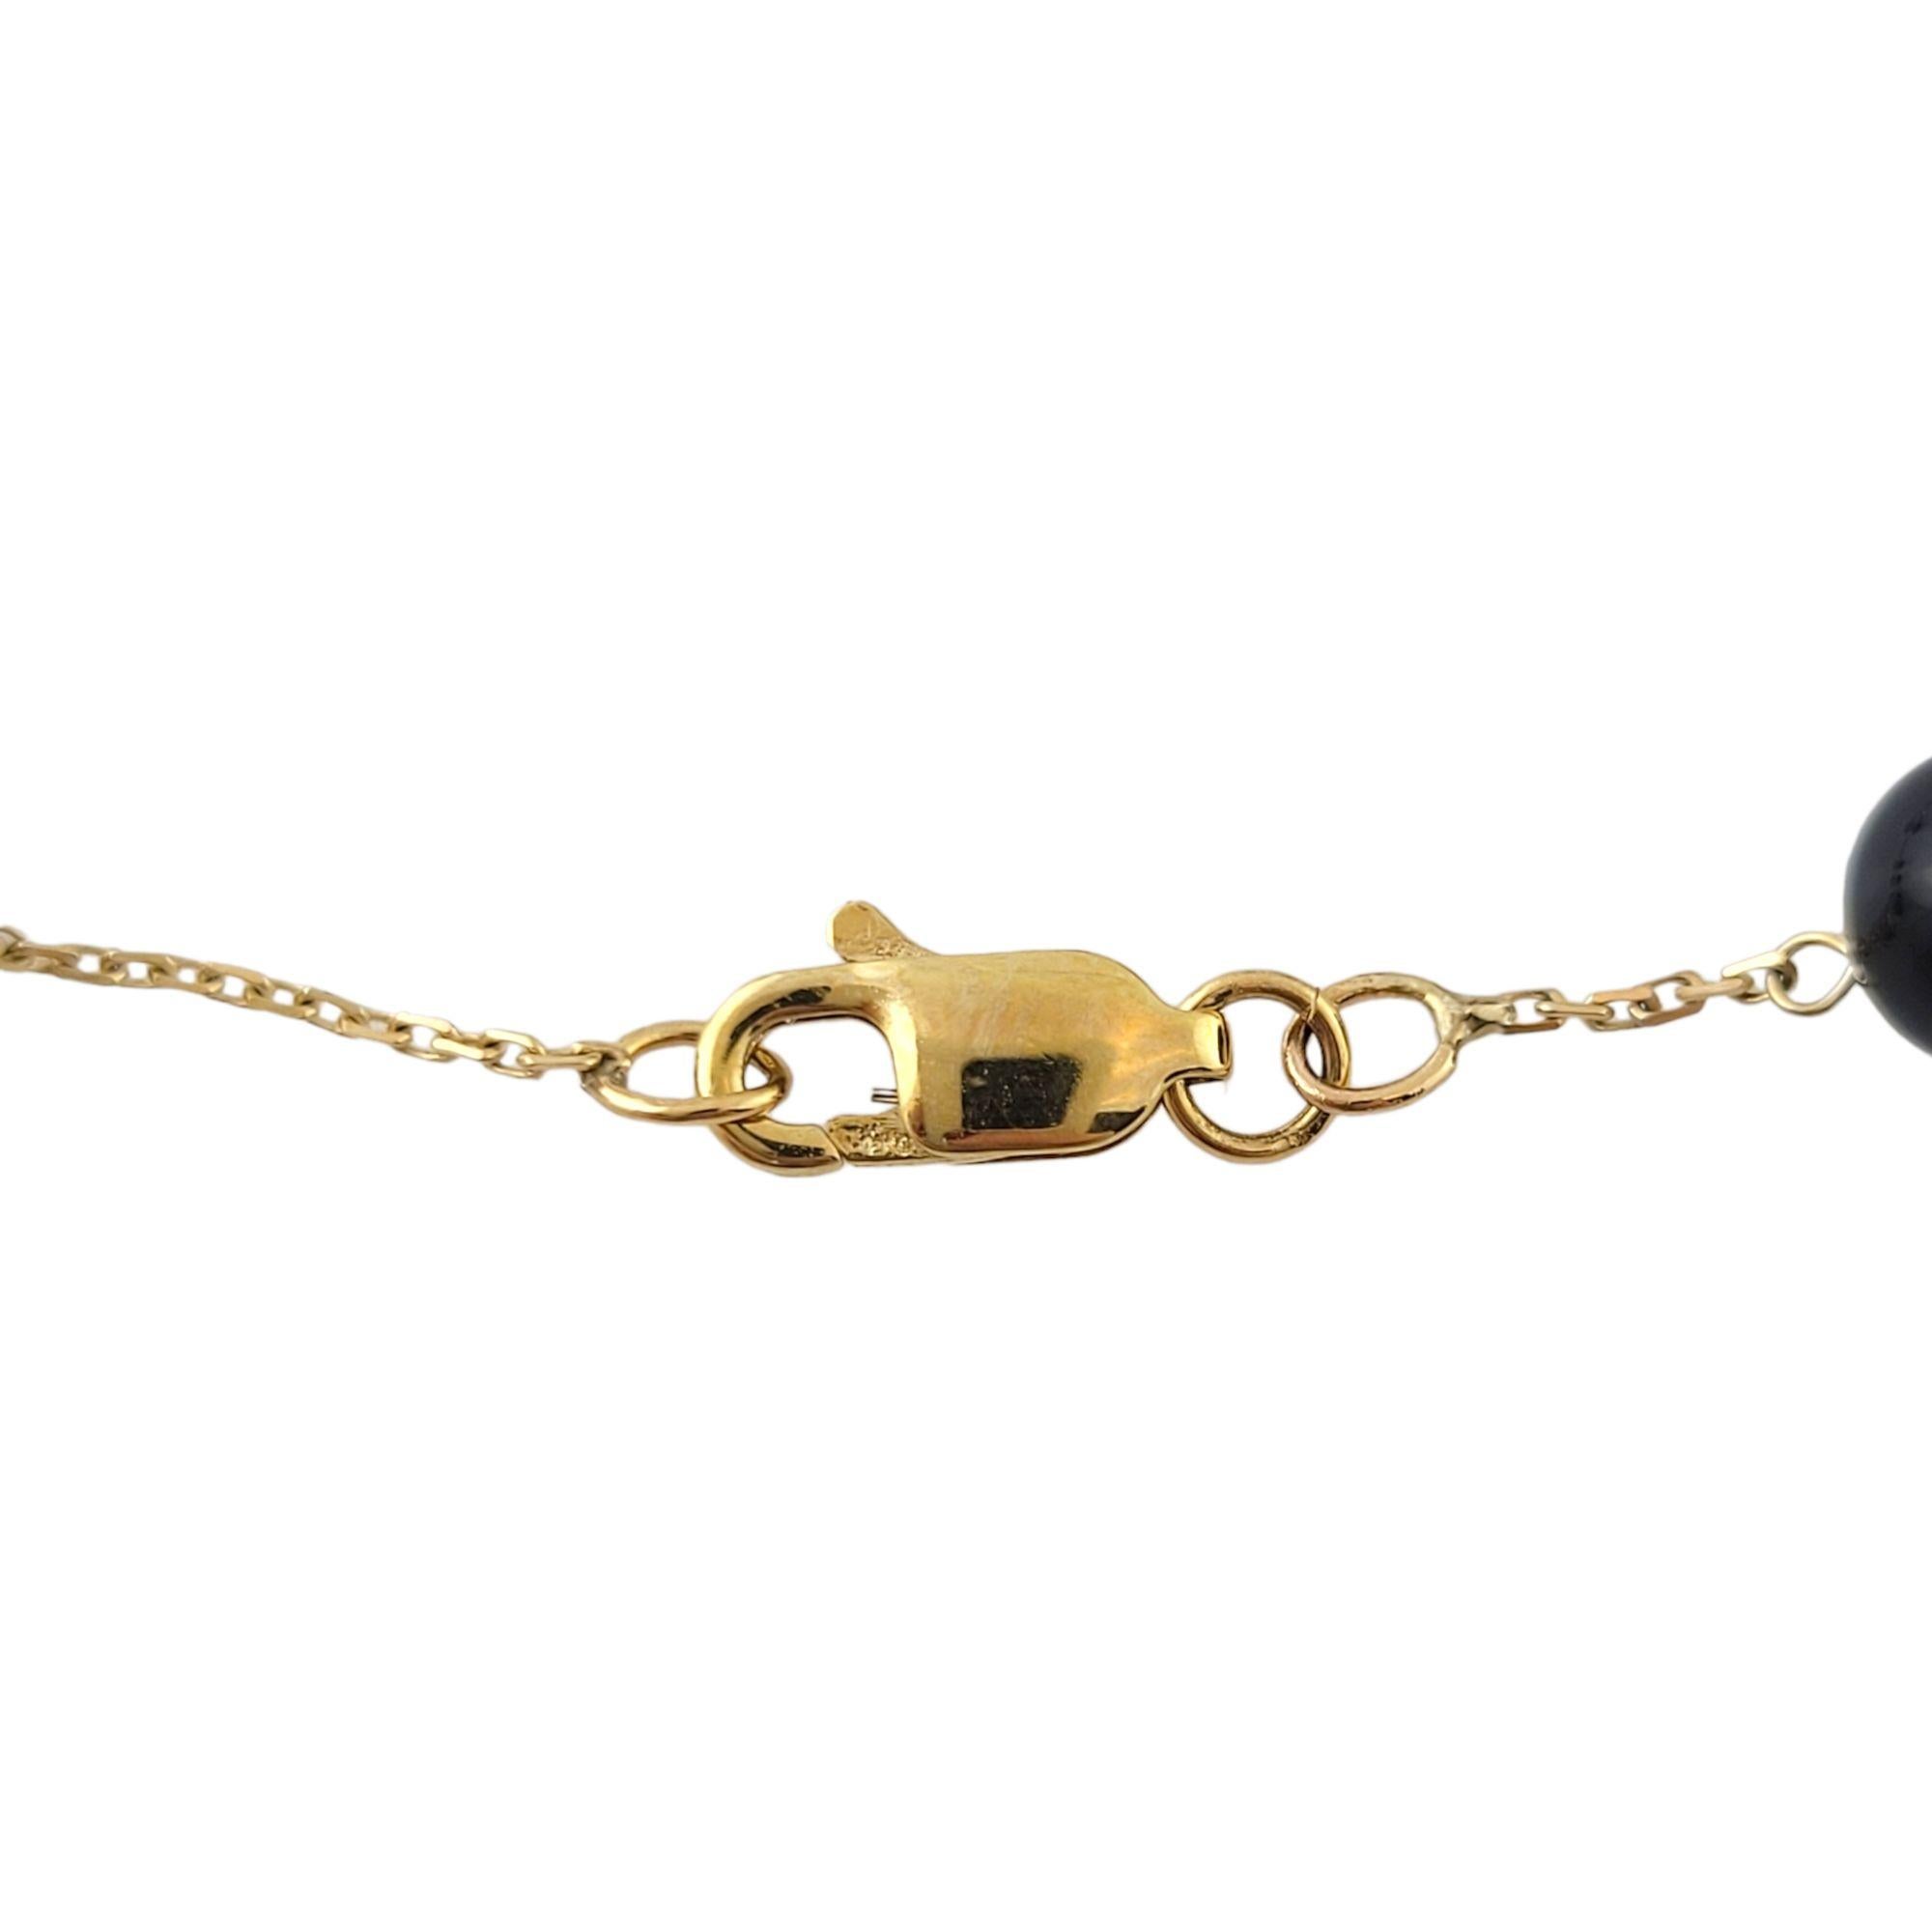 Vintage 14K Yellow Gold Chain & Black Onyx Necklace

12 gorgeous black onyx beads on a 14K yellow gold chain!

Chain length: 14 1/4